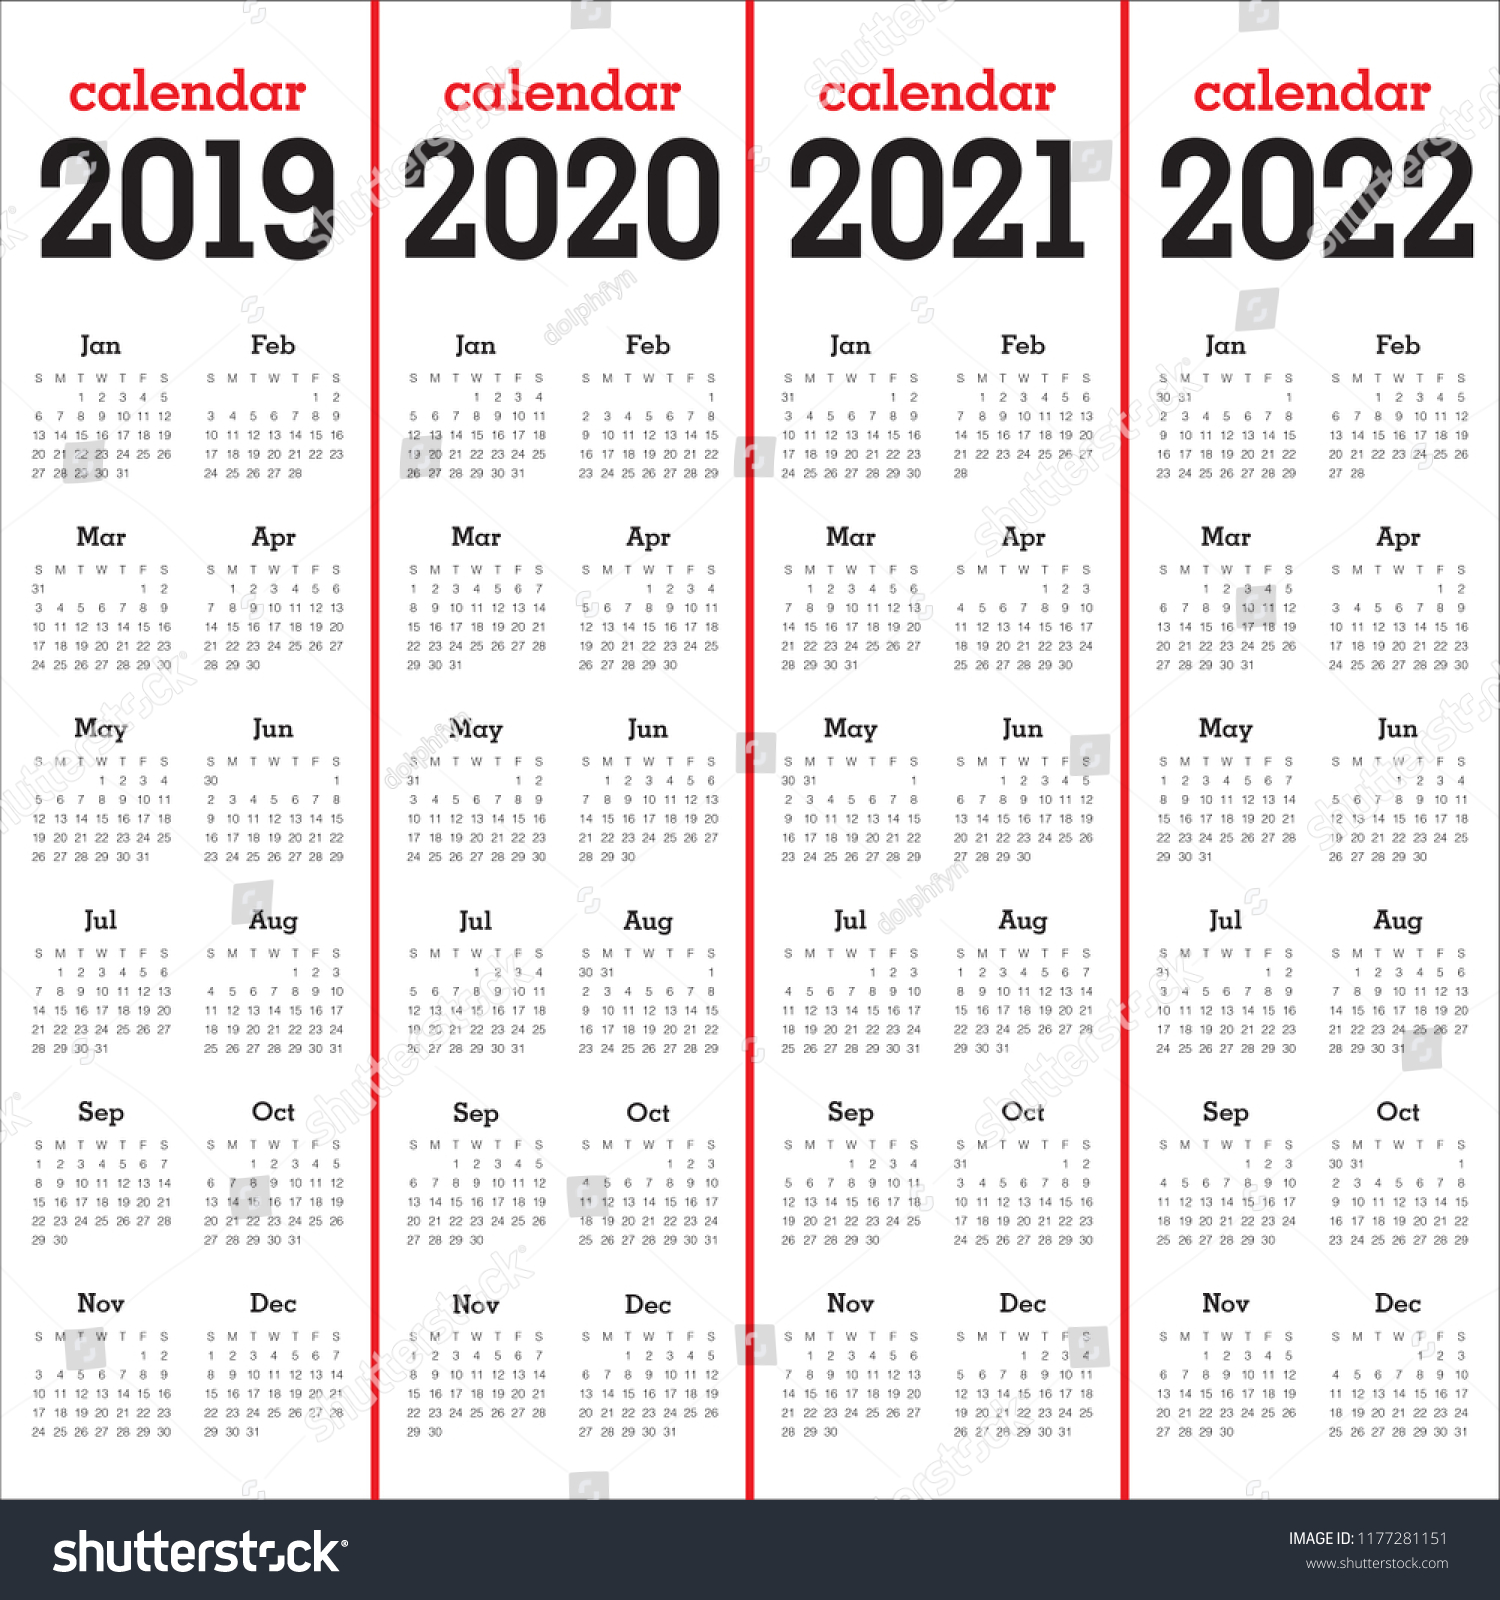 Year 2019 2020 2021 2022 Calendar Stock Vector (Royalty Free) 1177281151